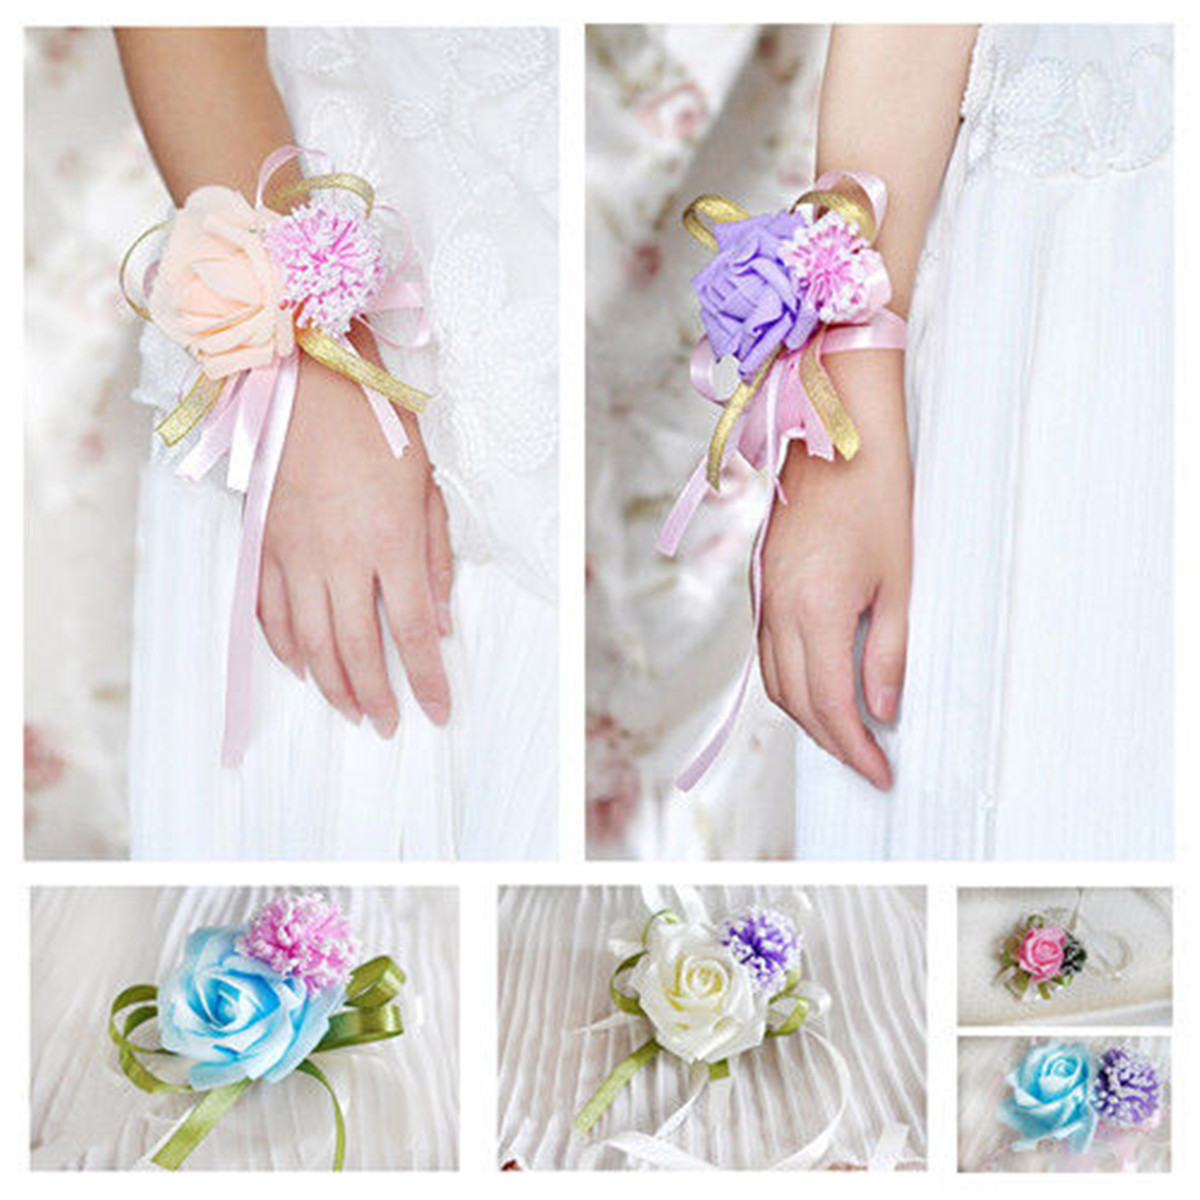 Brides-Bridesmaid-Wedding-Handmade-Bouquet-Hand-Flowers-Wrist-Corsages-Decoration-998682